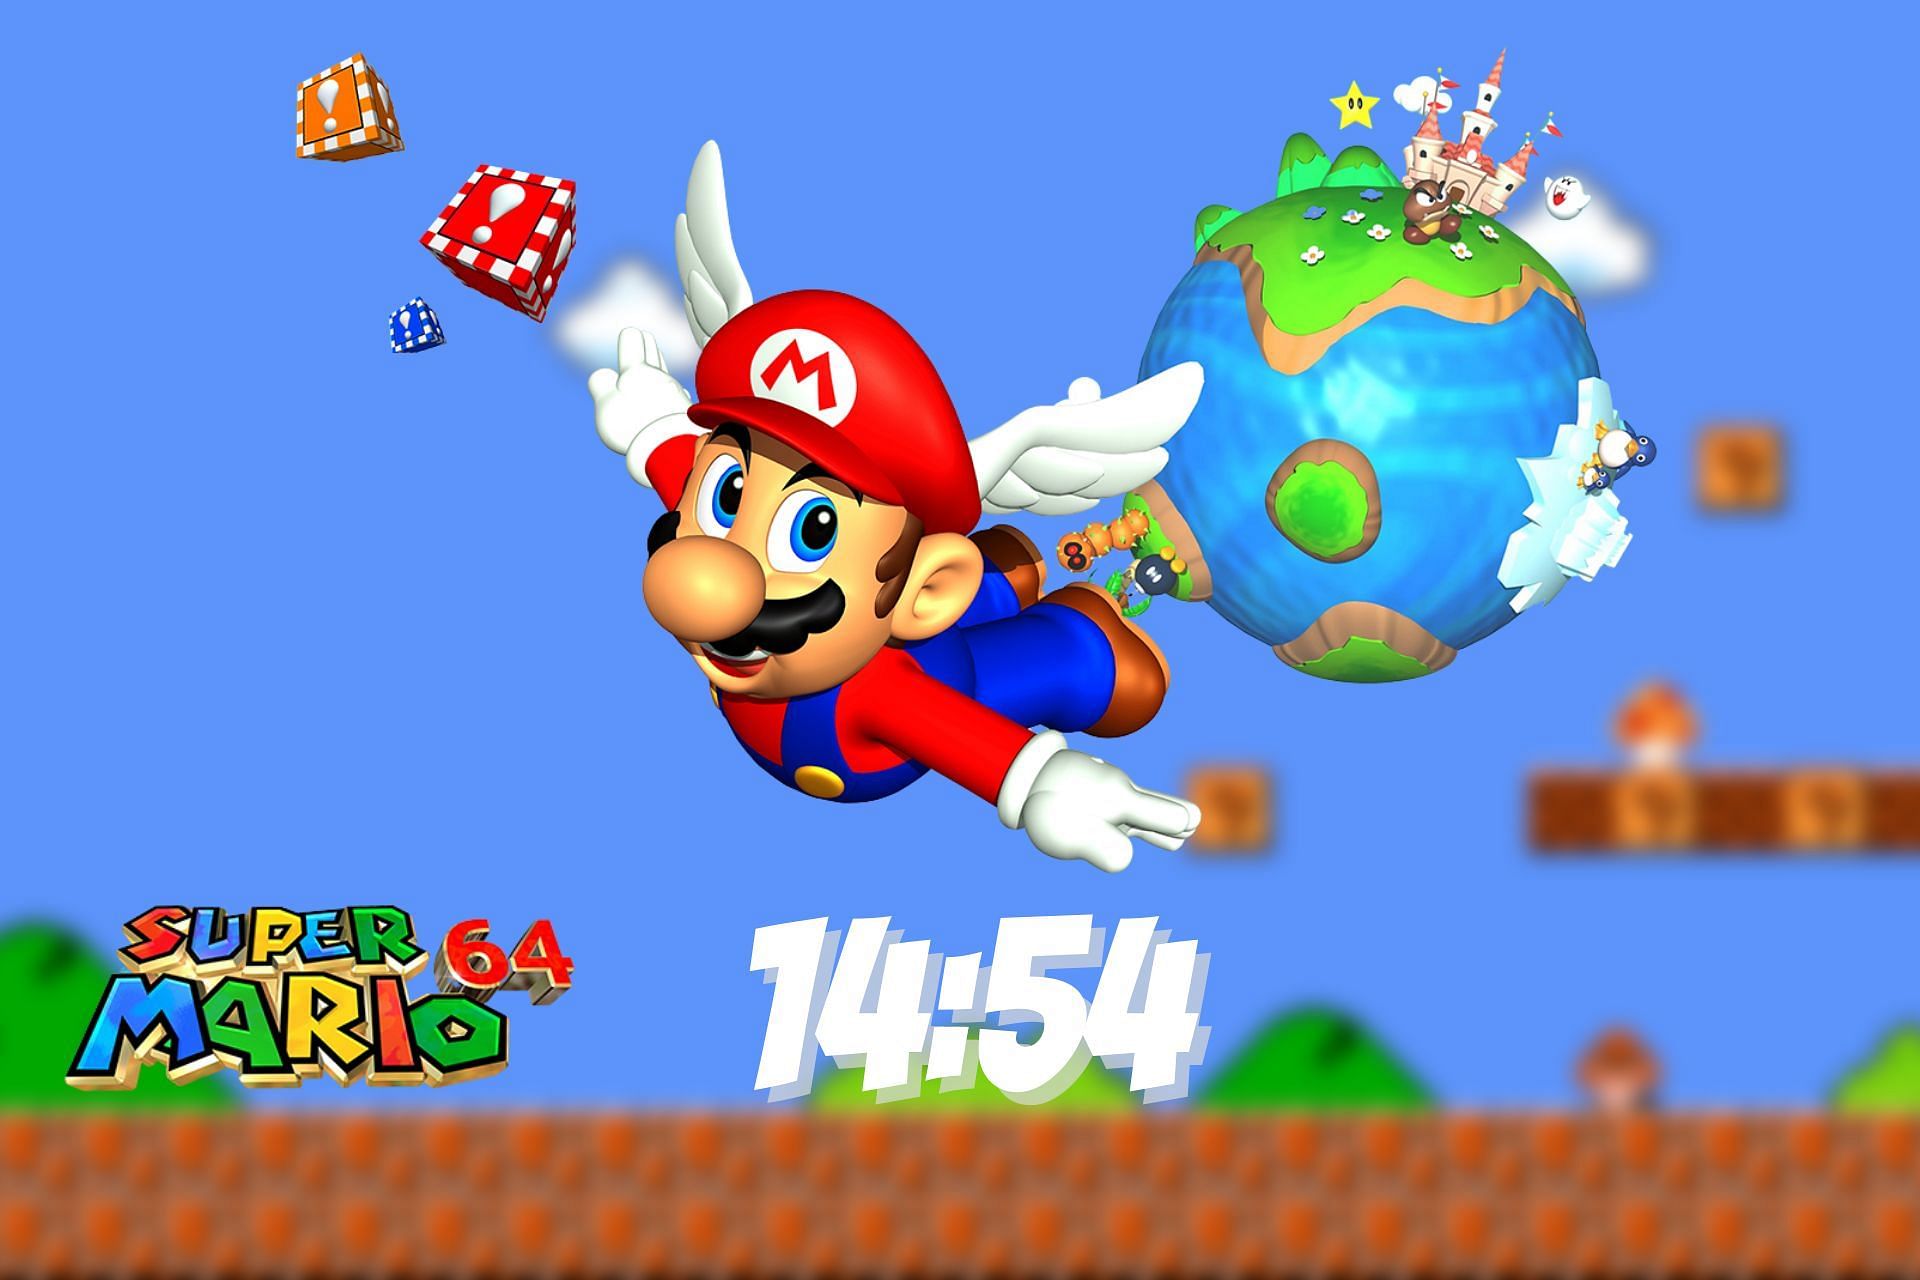 GreenSuigi beats 16 star world record on Super Mario 64 (Image by SportsKeeda)